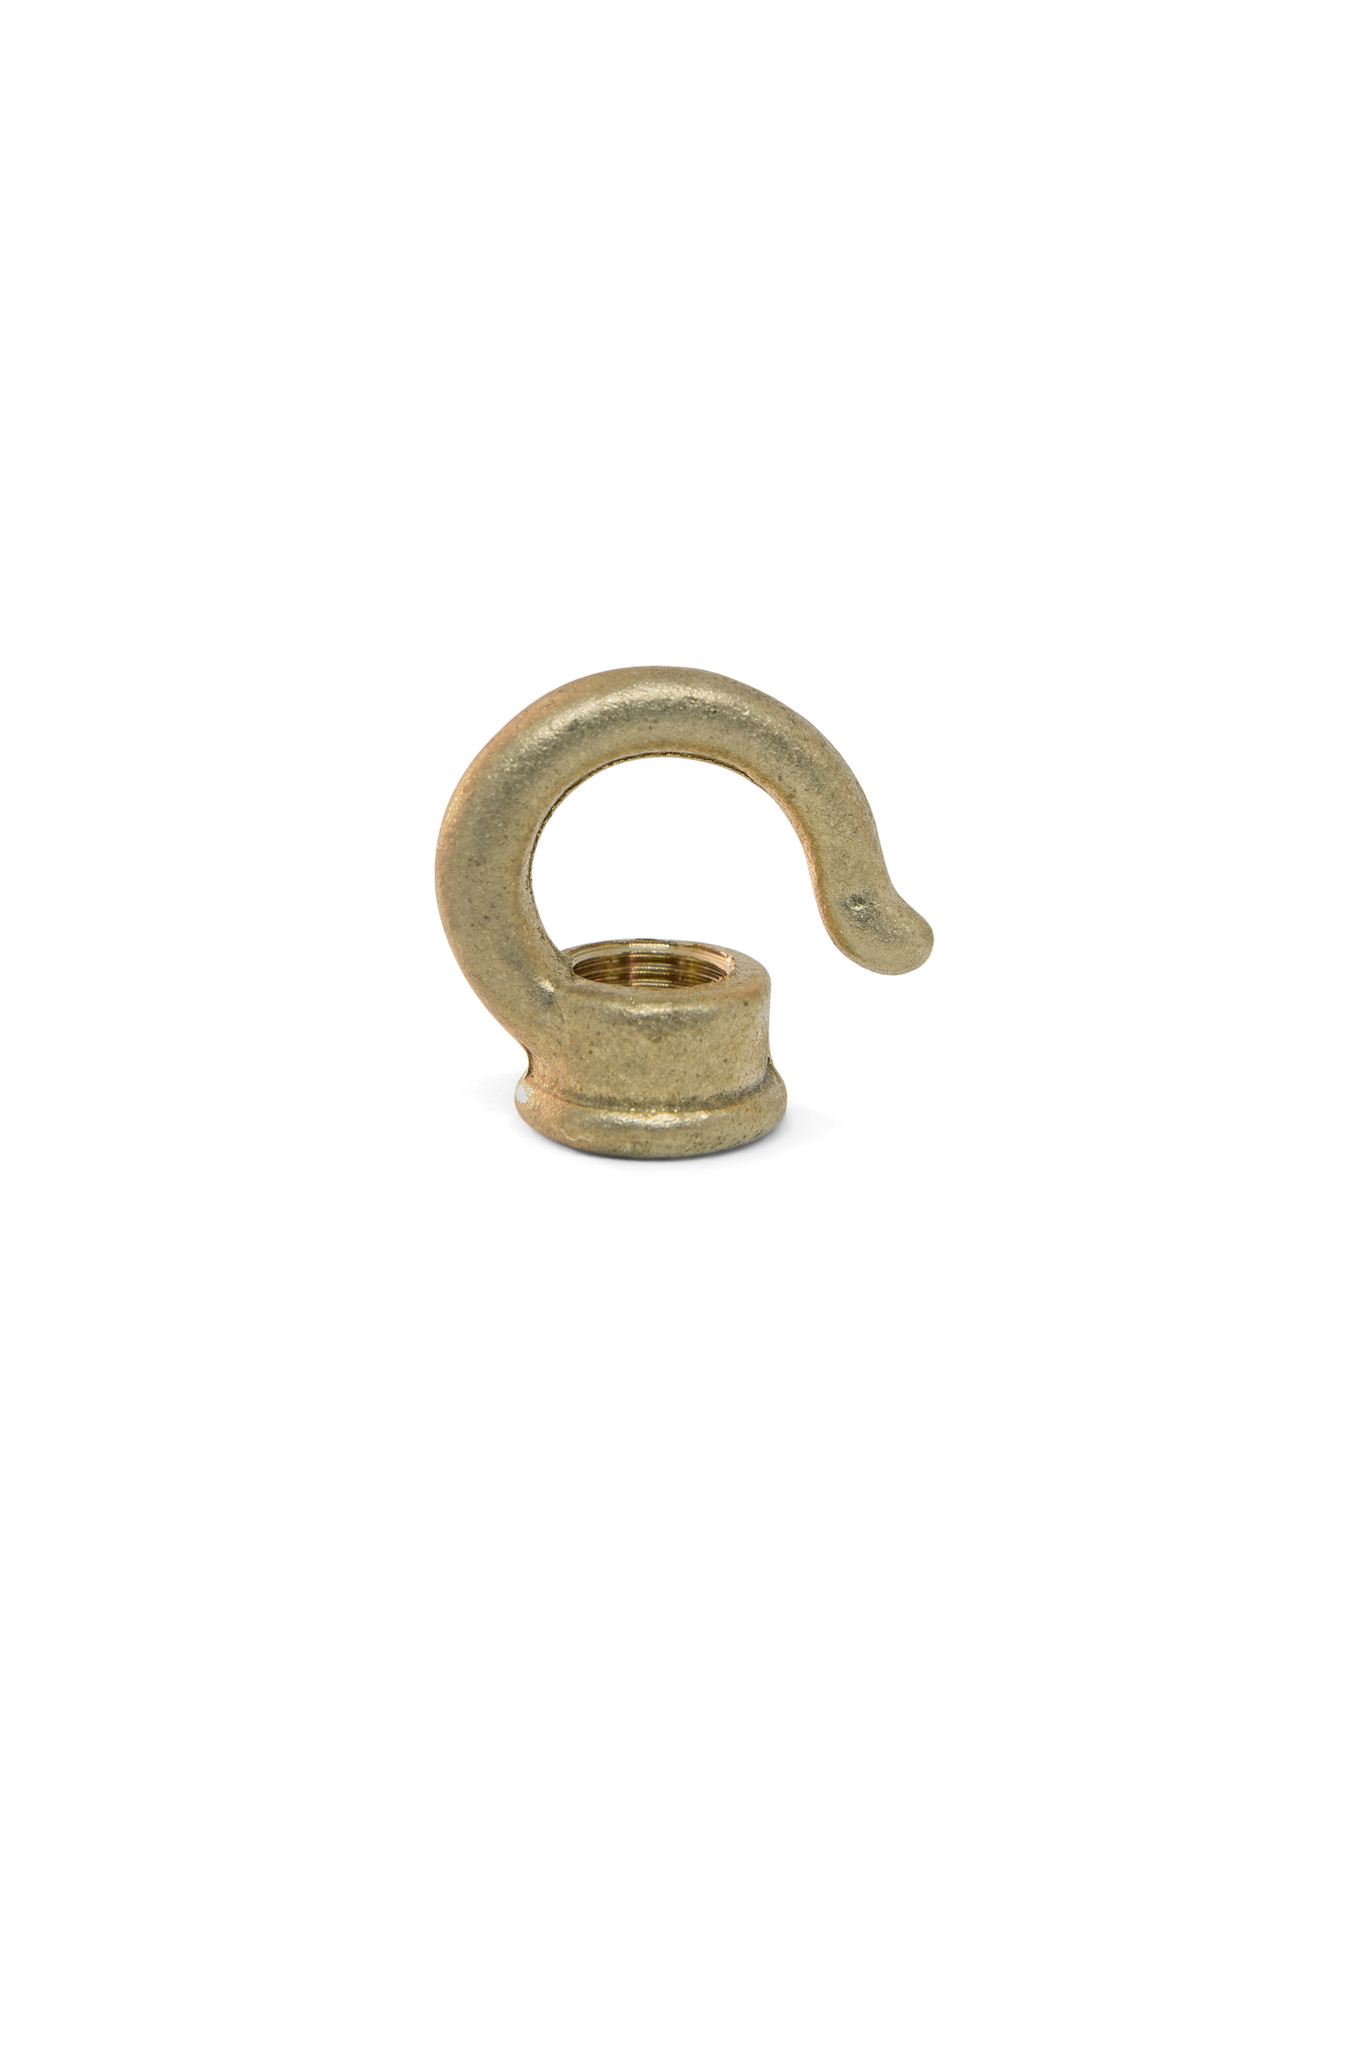 Brass Open Hook for Ceiling Light Chandelier, M10 Thread